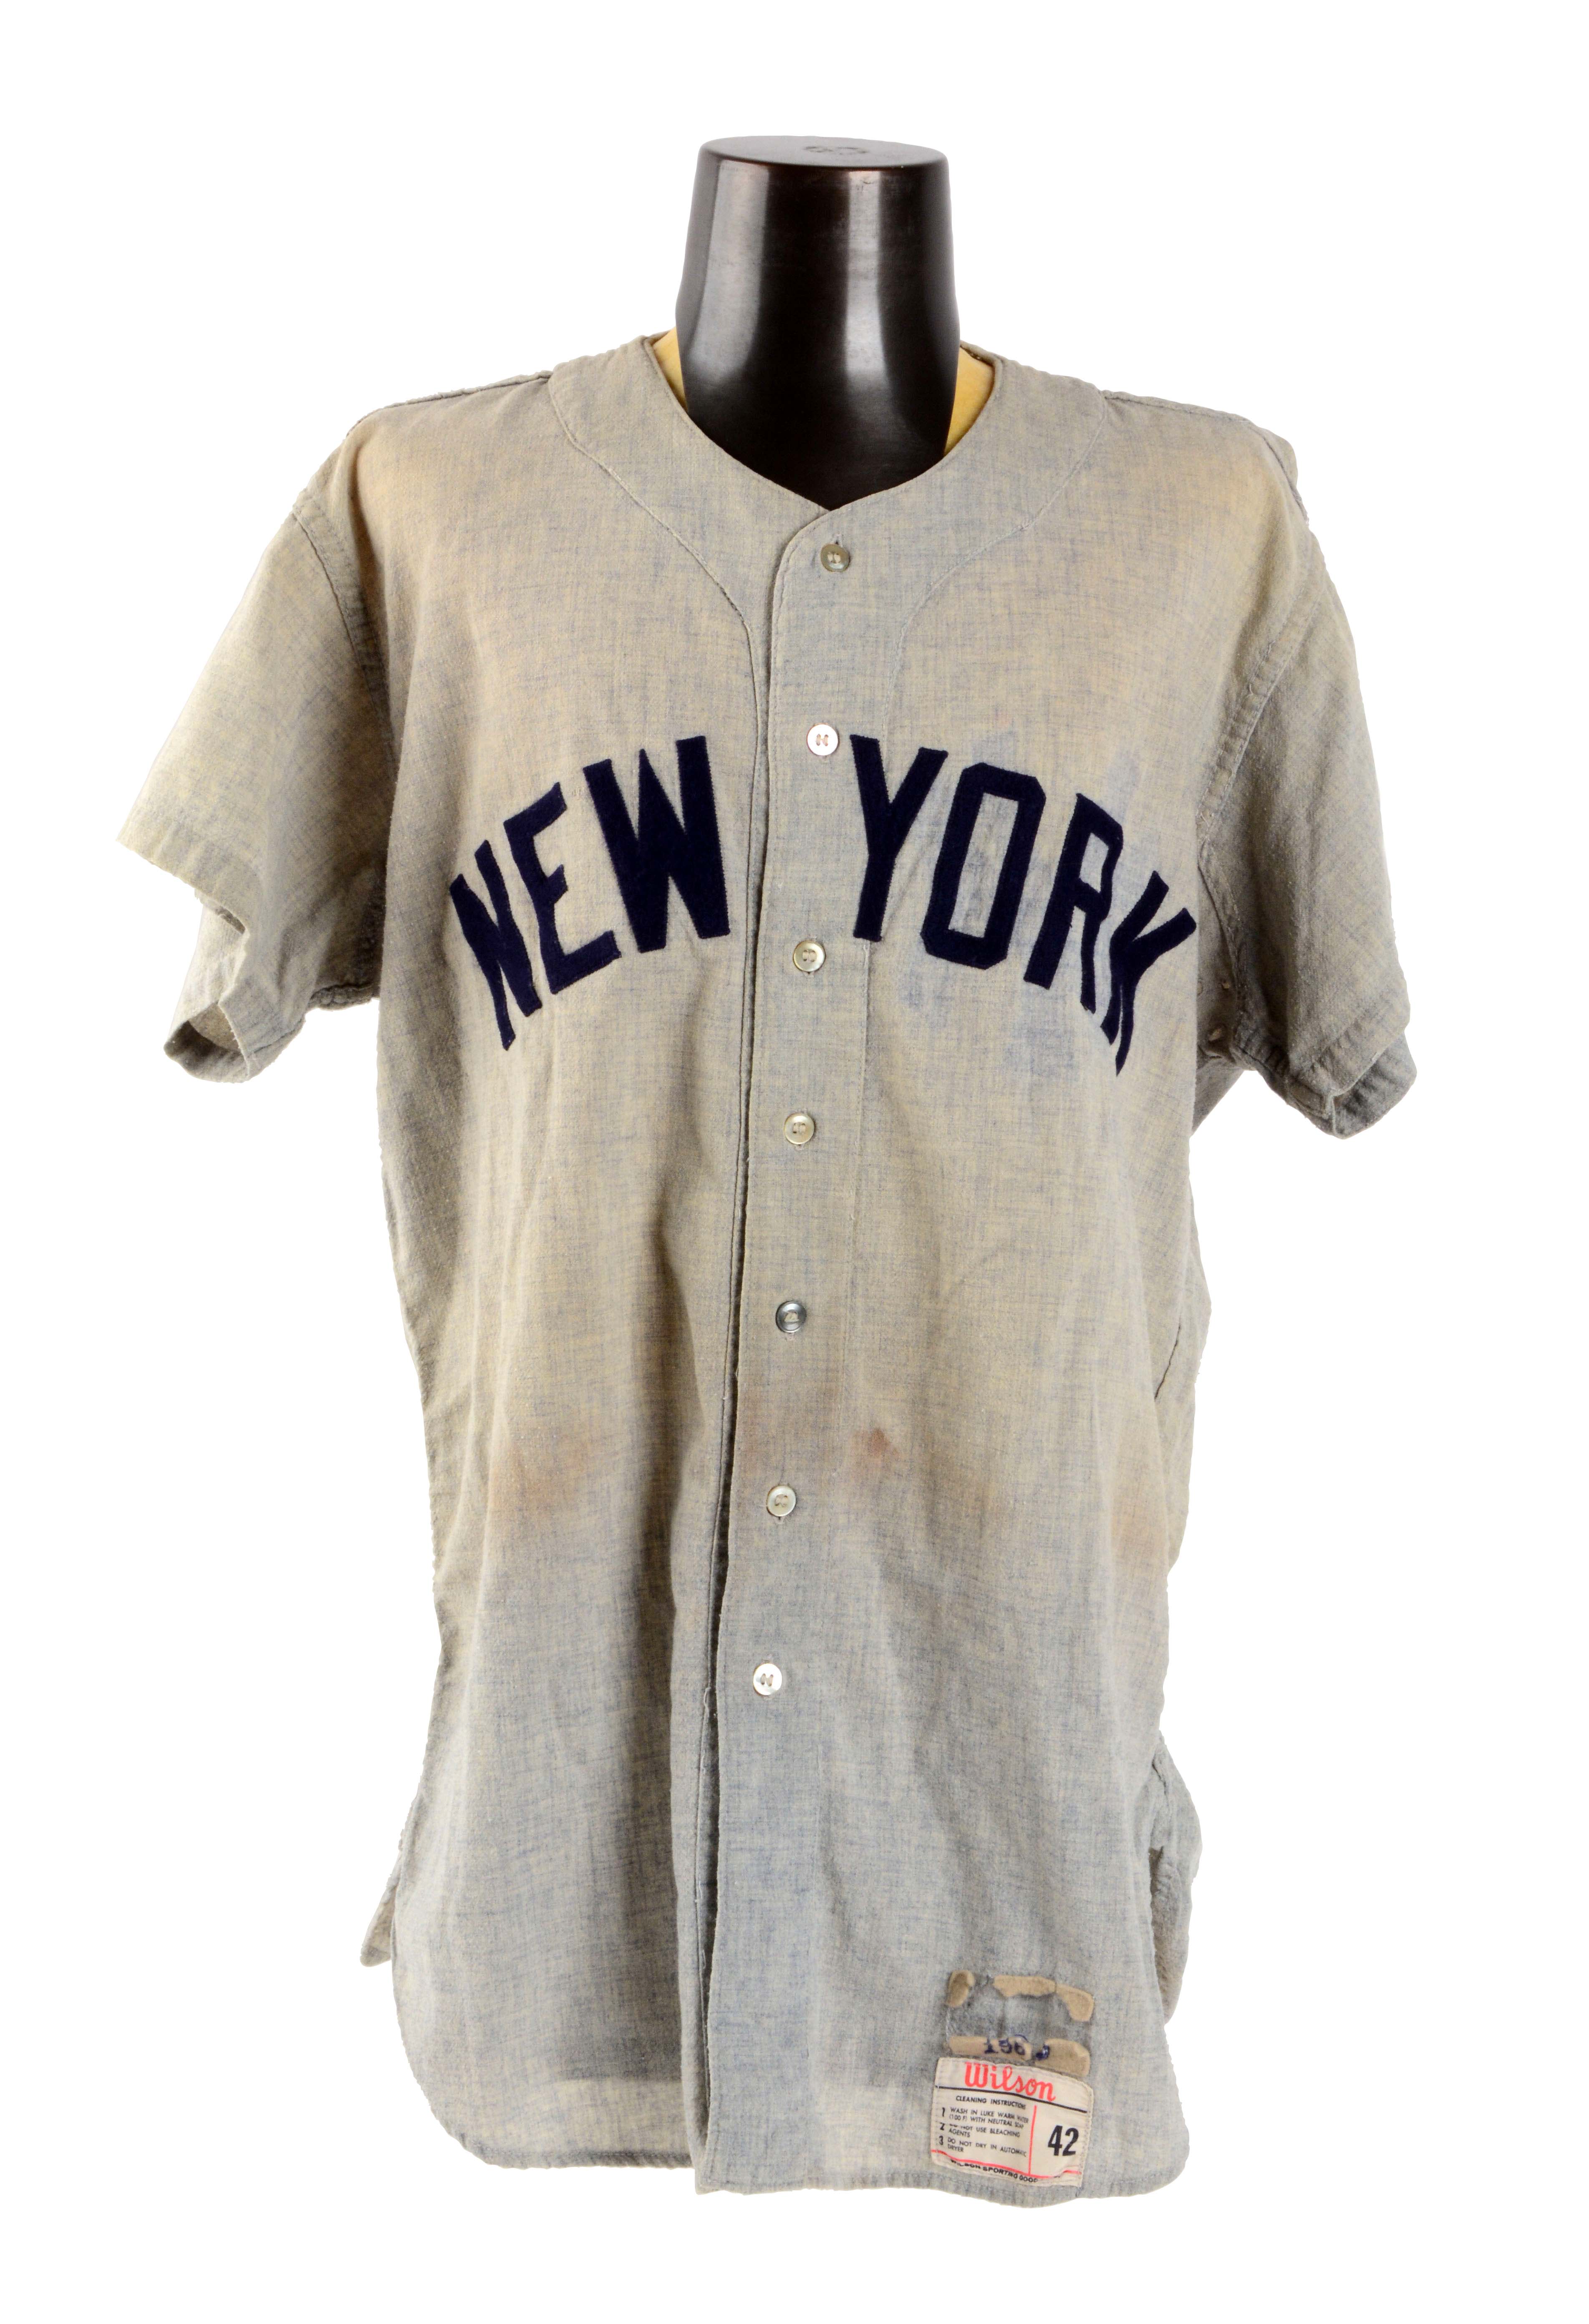 Grey Flannel to auction Yogi Berra uniform from 1956 World Series